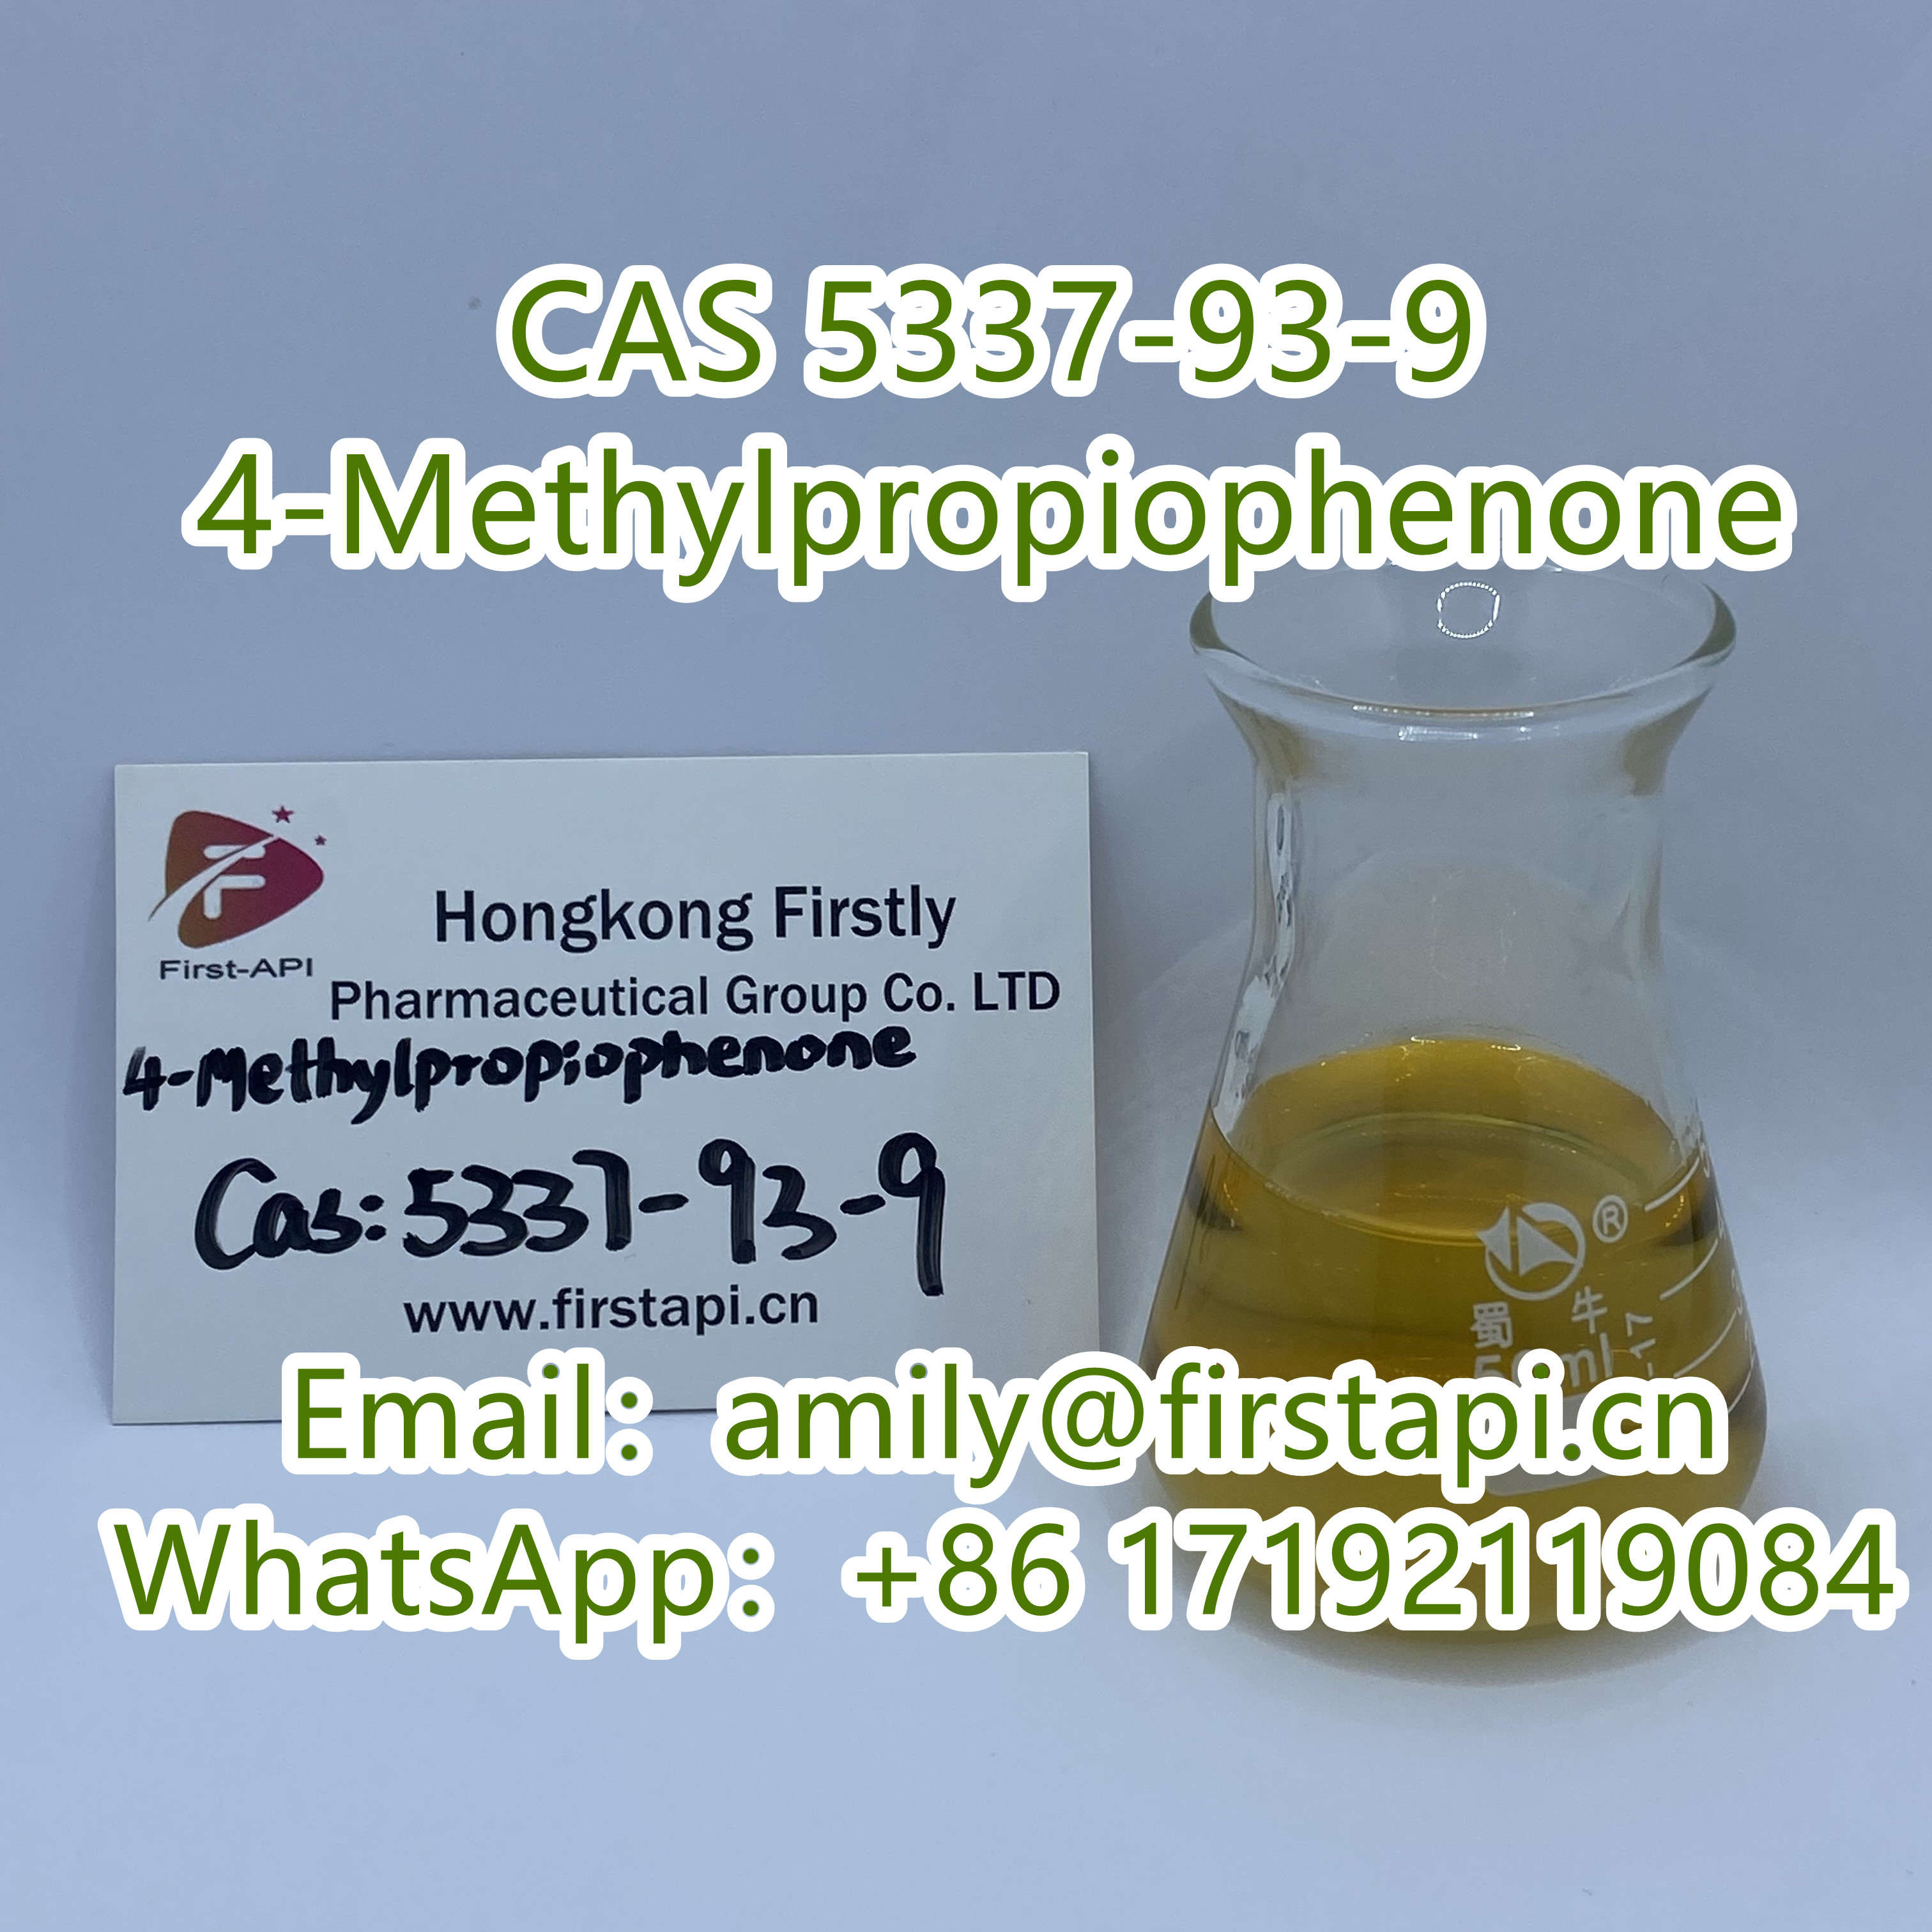 4-Methylpropiophenone whatsapp:+86 17192119084  CAS 5337-93-9  - photo